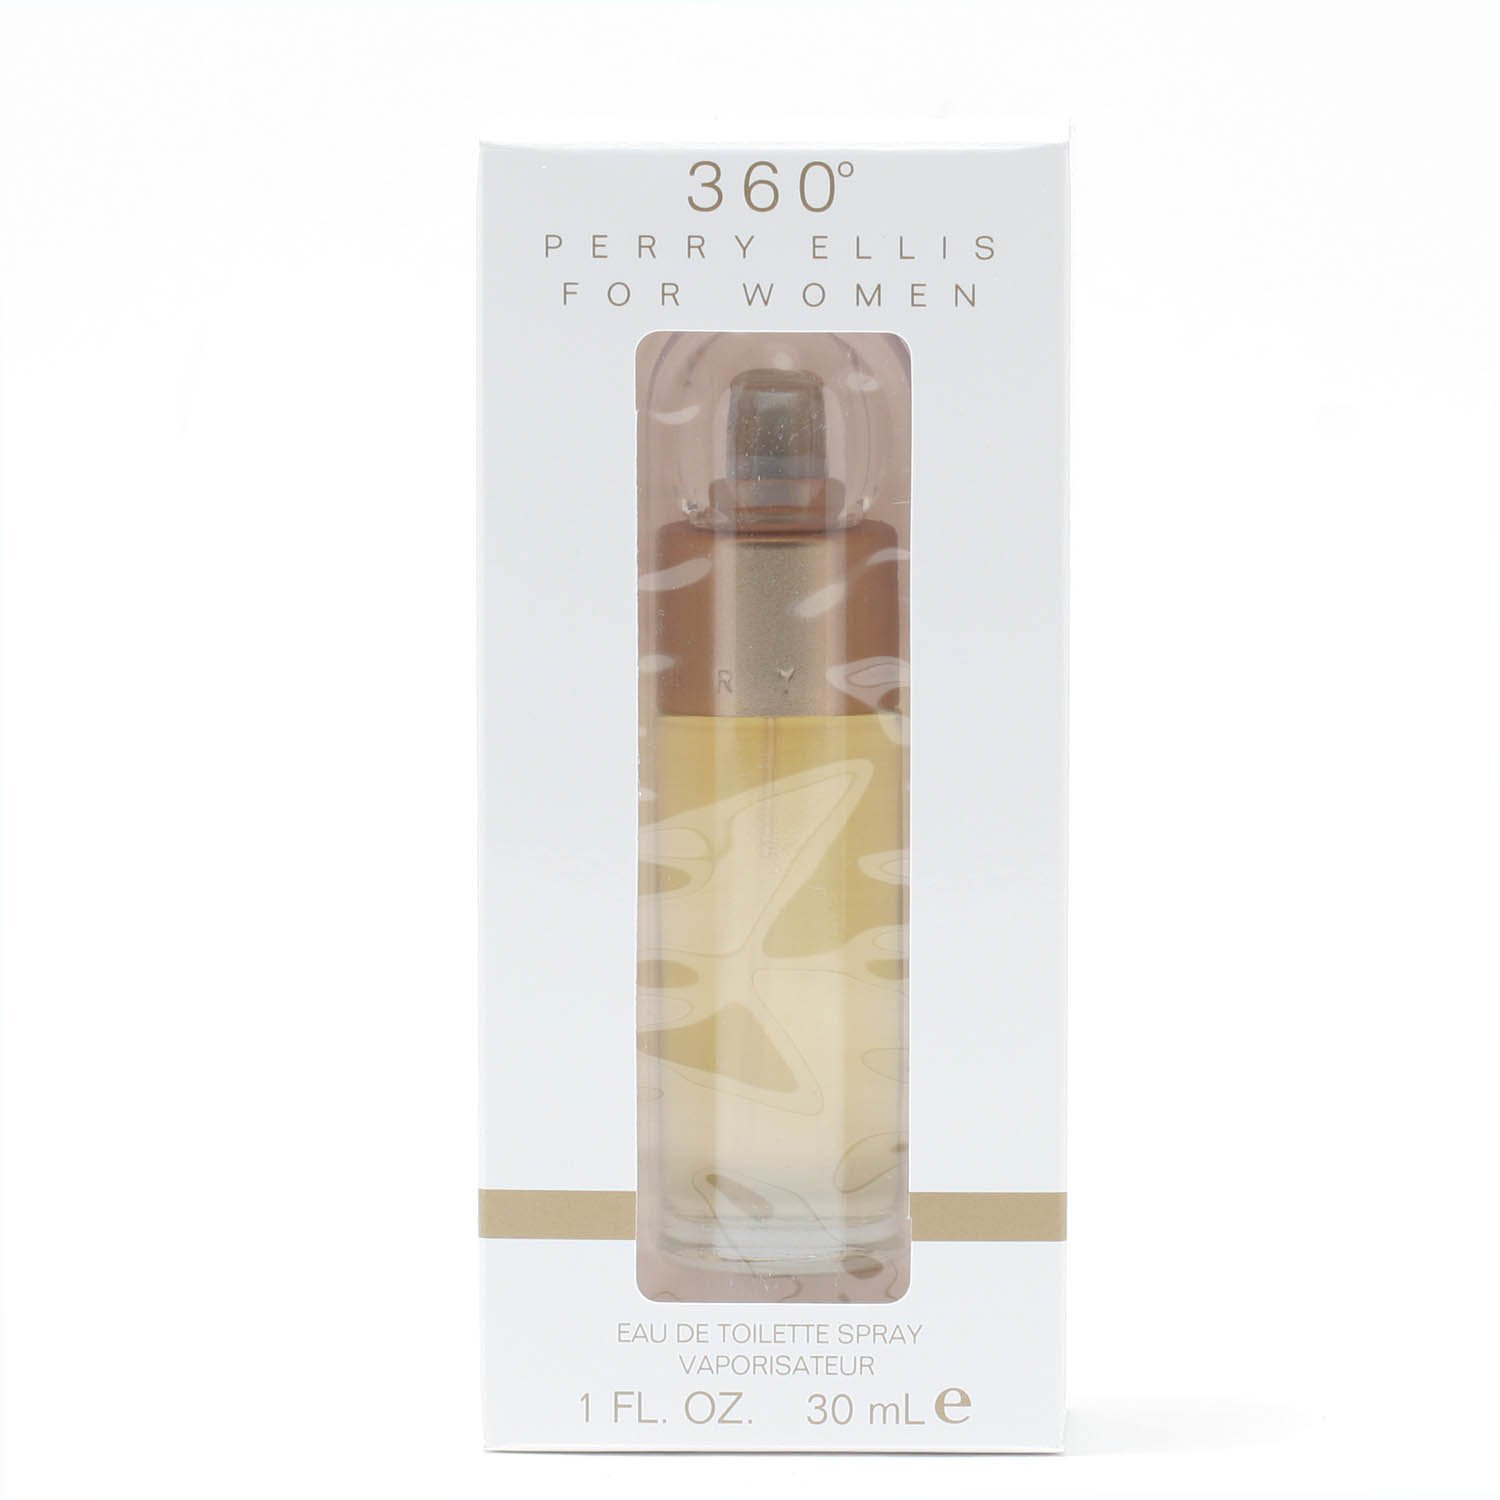 Perfume - 360 FOR WOMEN BY PERRY ELLIS - EAU DE TOILETTE SPRAY